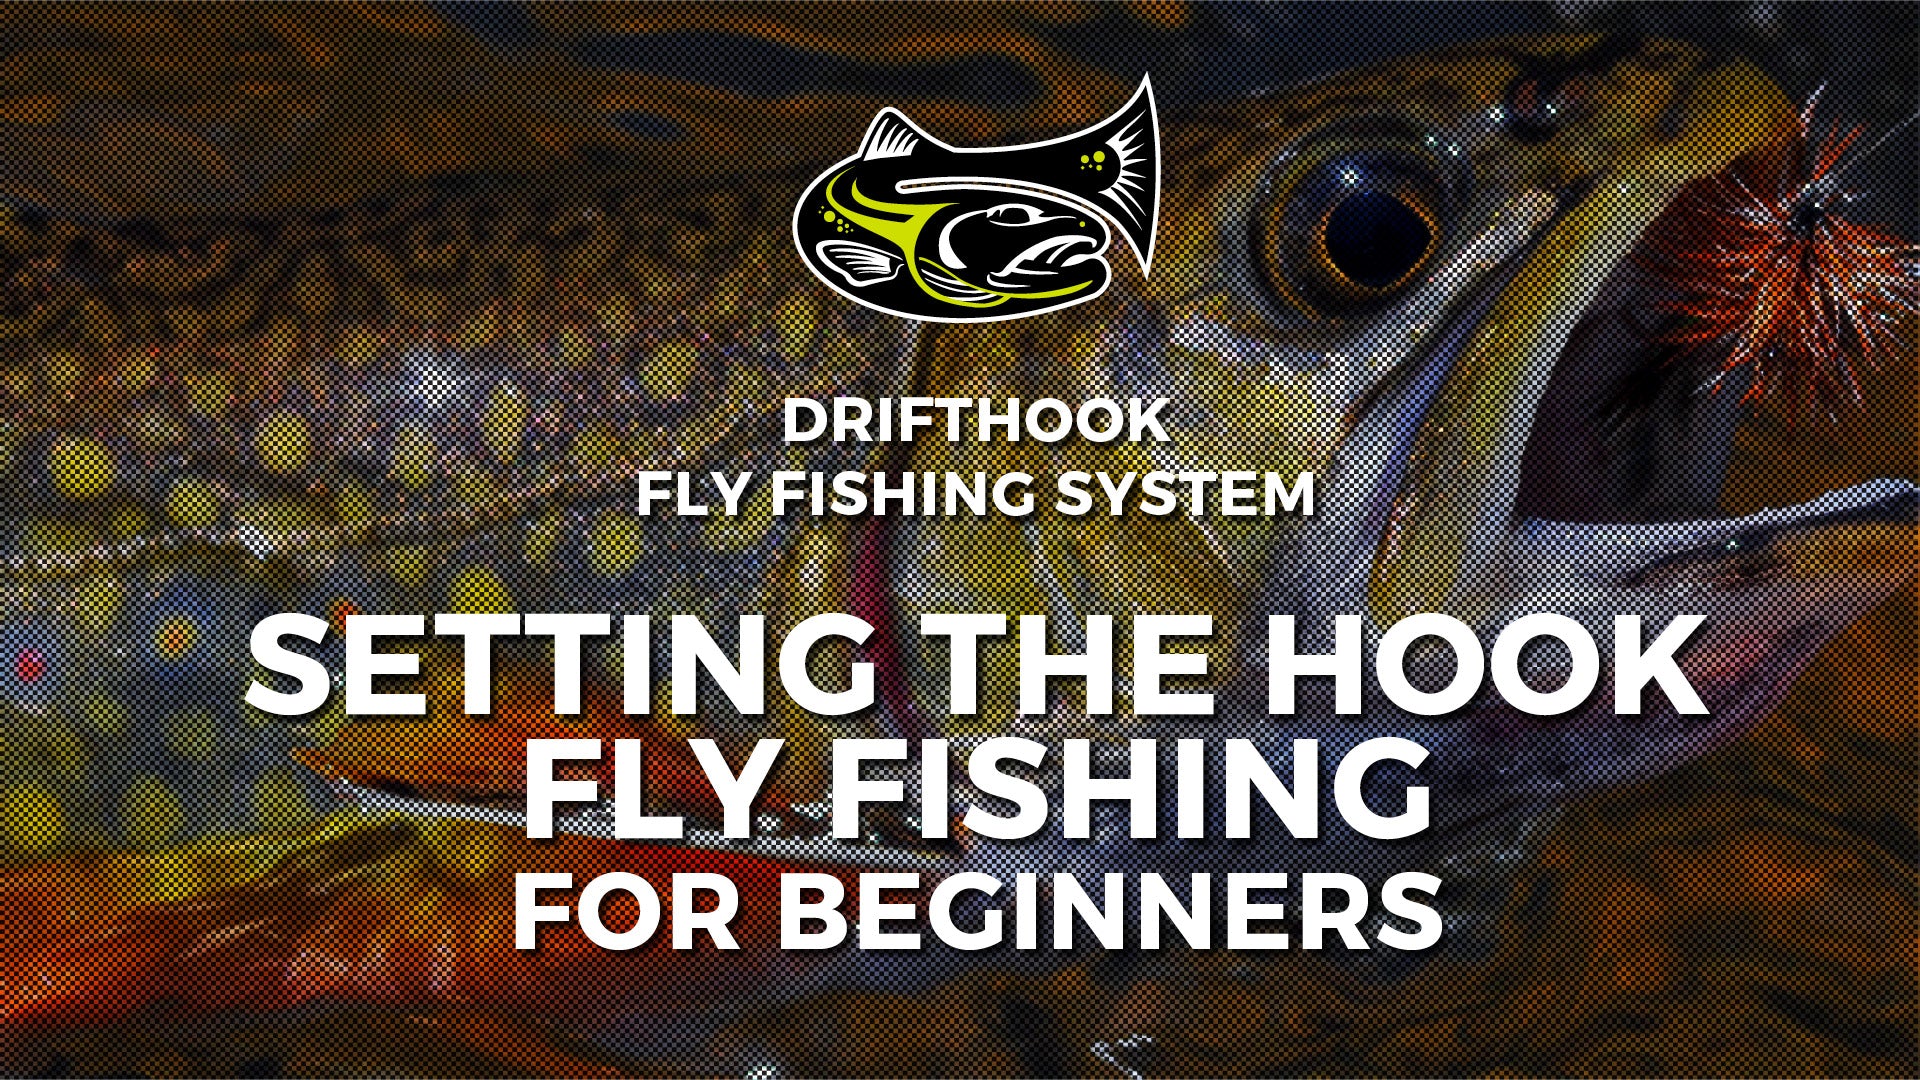 https://cdn.shopify.com/s/files/1/0031/2210/2339/articles/setting-the-hook-fly-fishing-for-beginners_1920x.jpg?v=1582319335